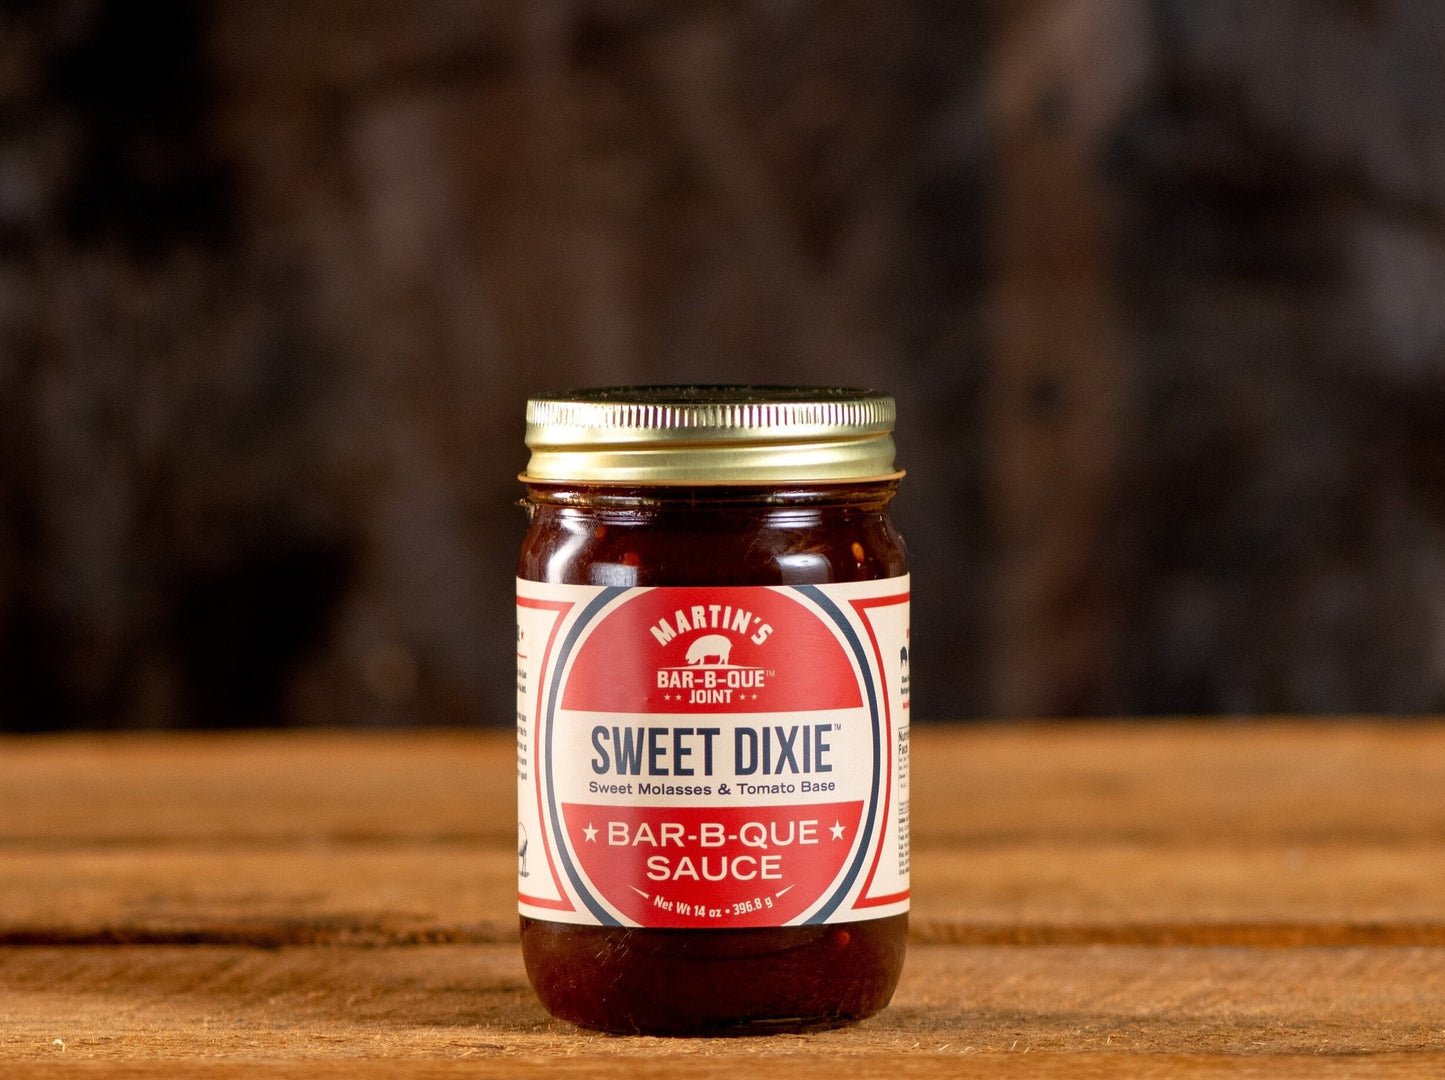 Sweet Dixie Bar-B-Que Sauce